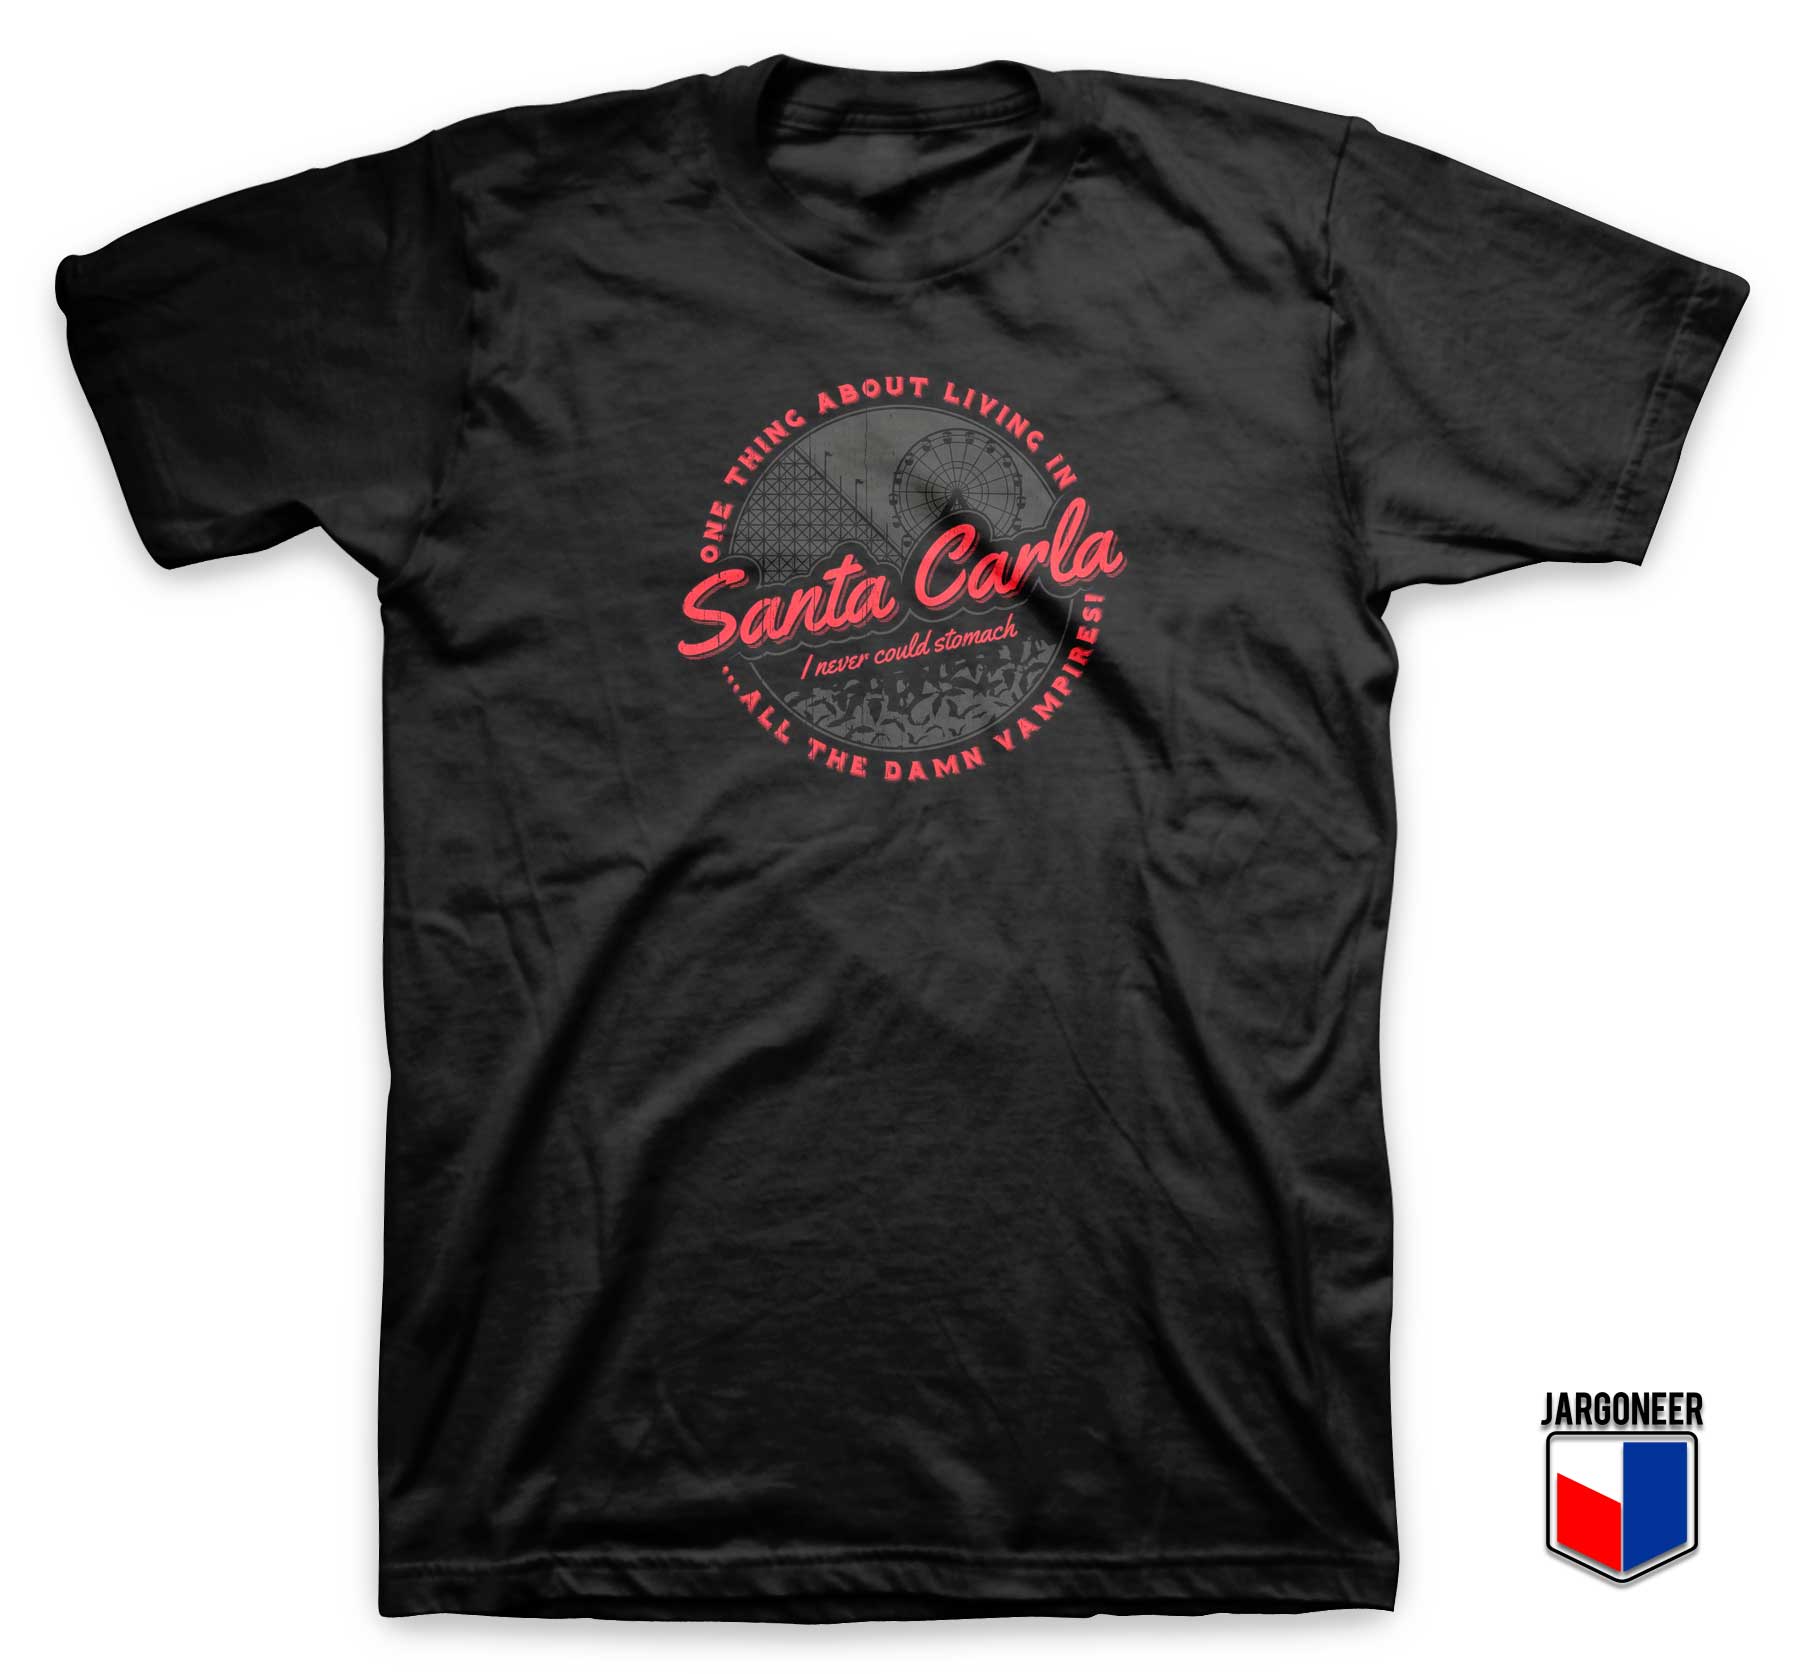 Santa Carla Vampires T Shirt - Shop Unique Graphic Cool Shirt Designs